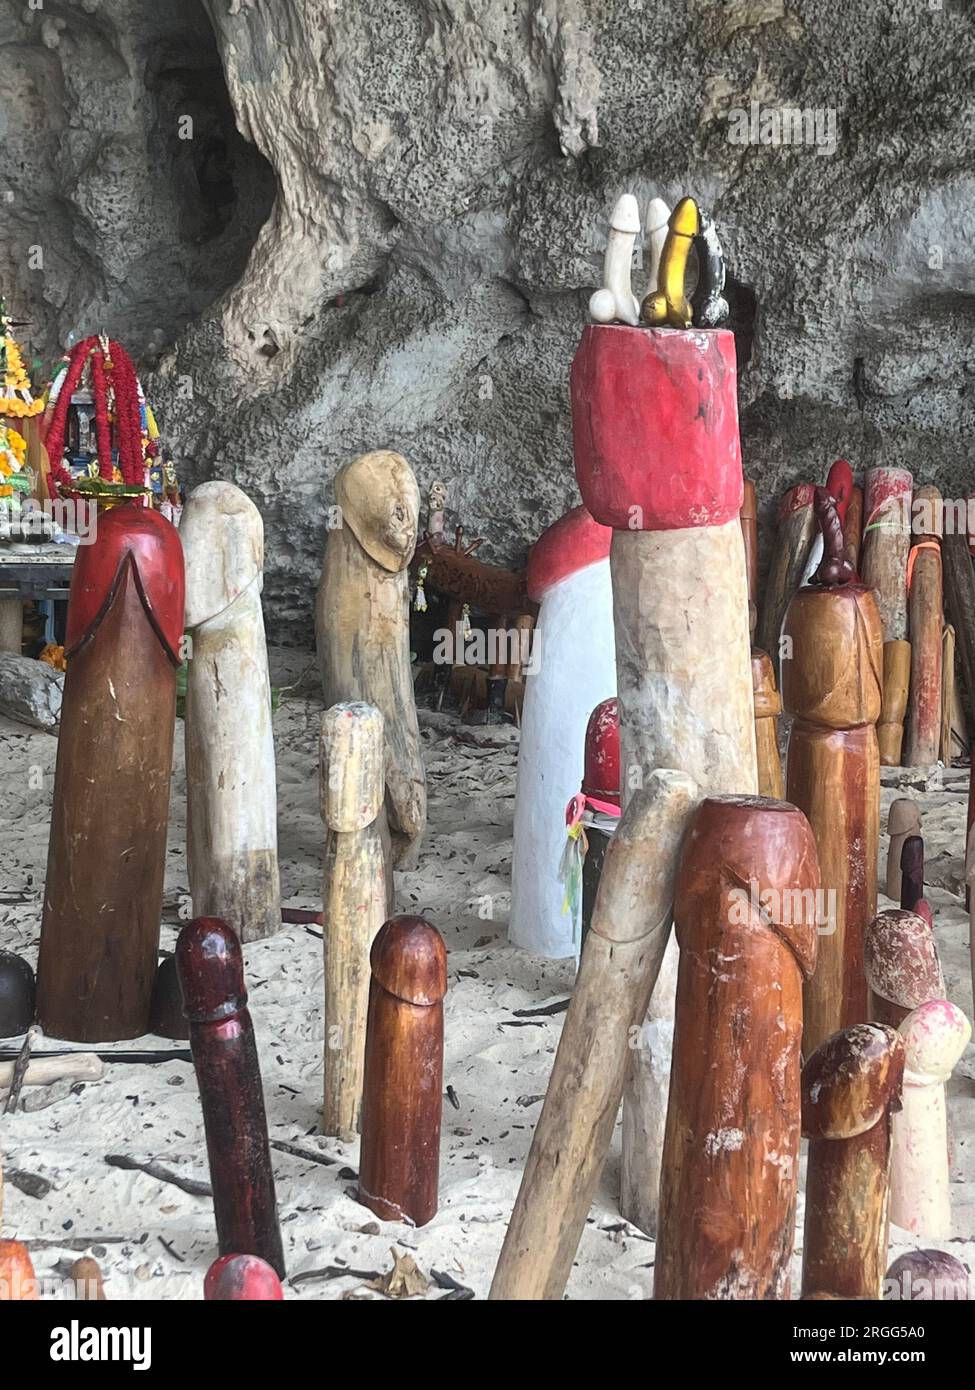 Wooden penises at Phra nang Cave, Krabi, Thailand Stock Photo